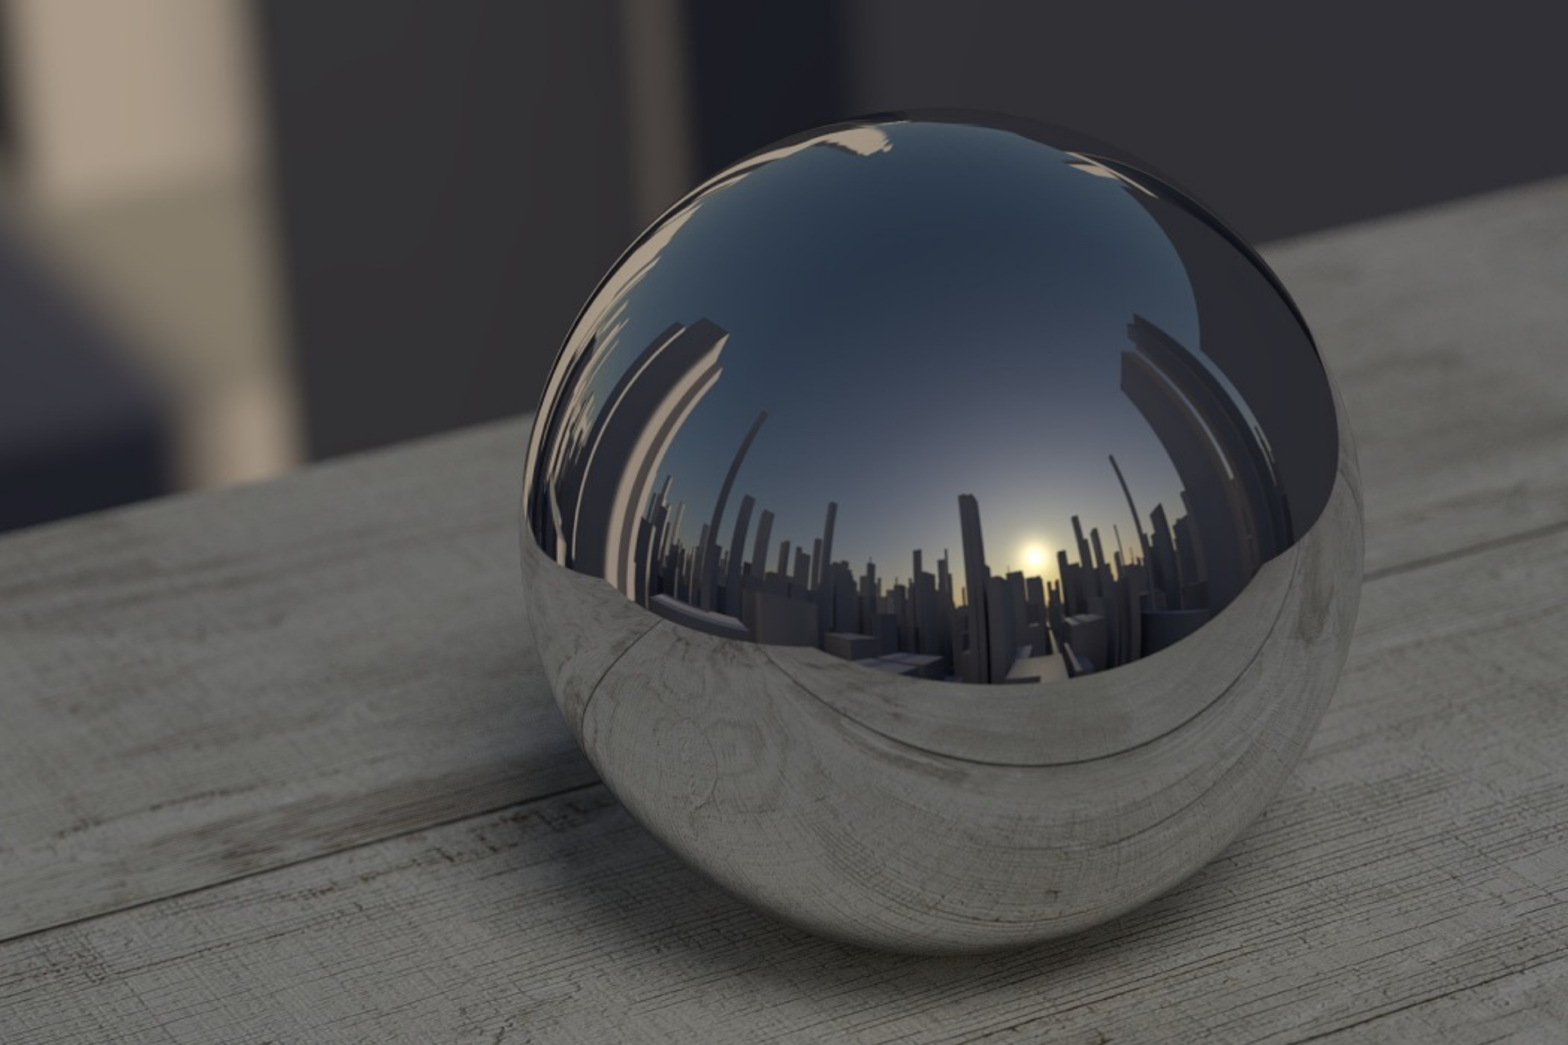 Mirrored ball reflected skyline